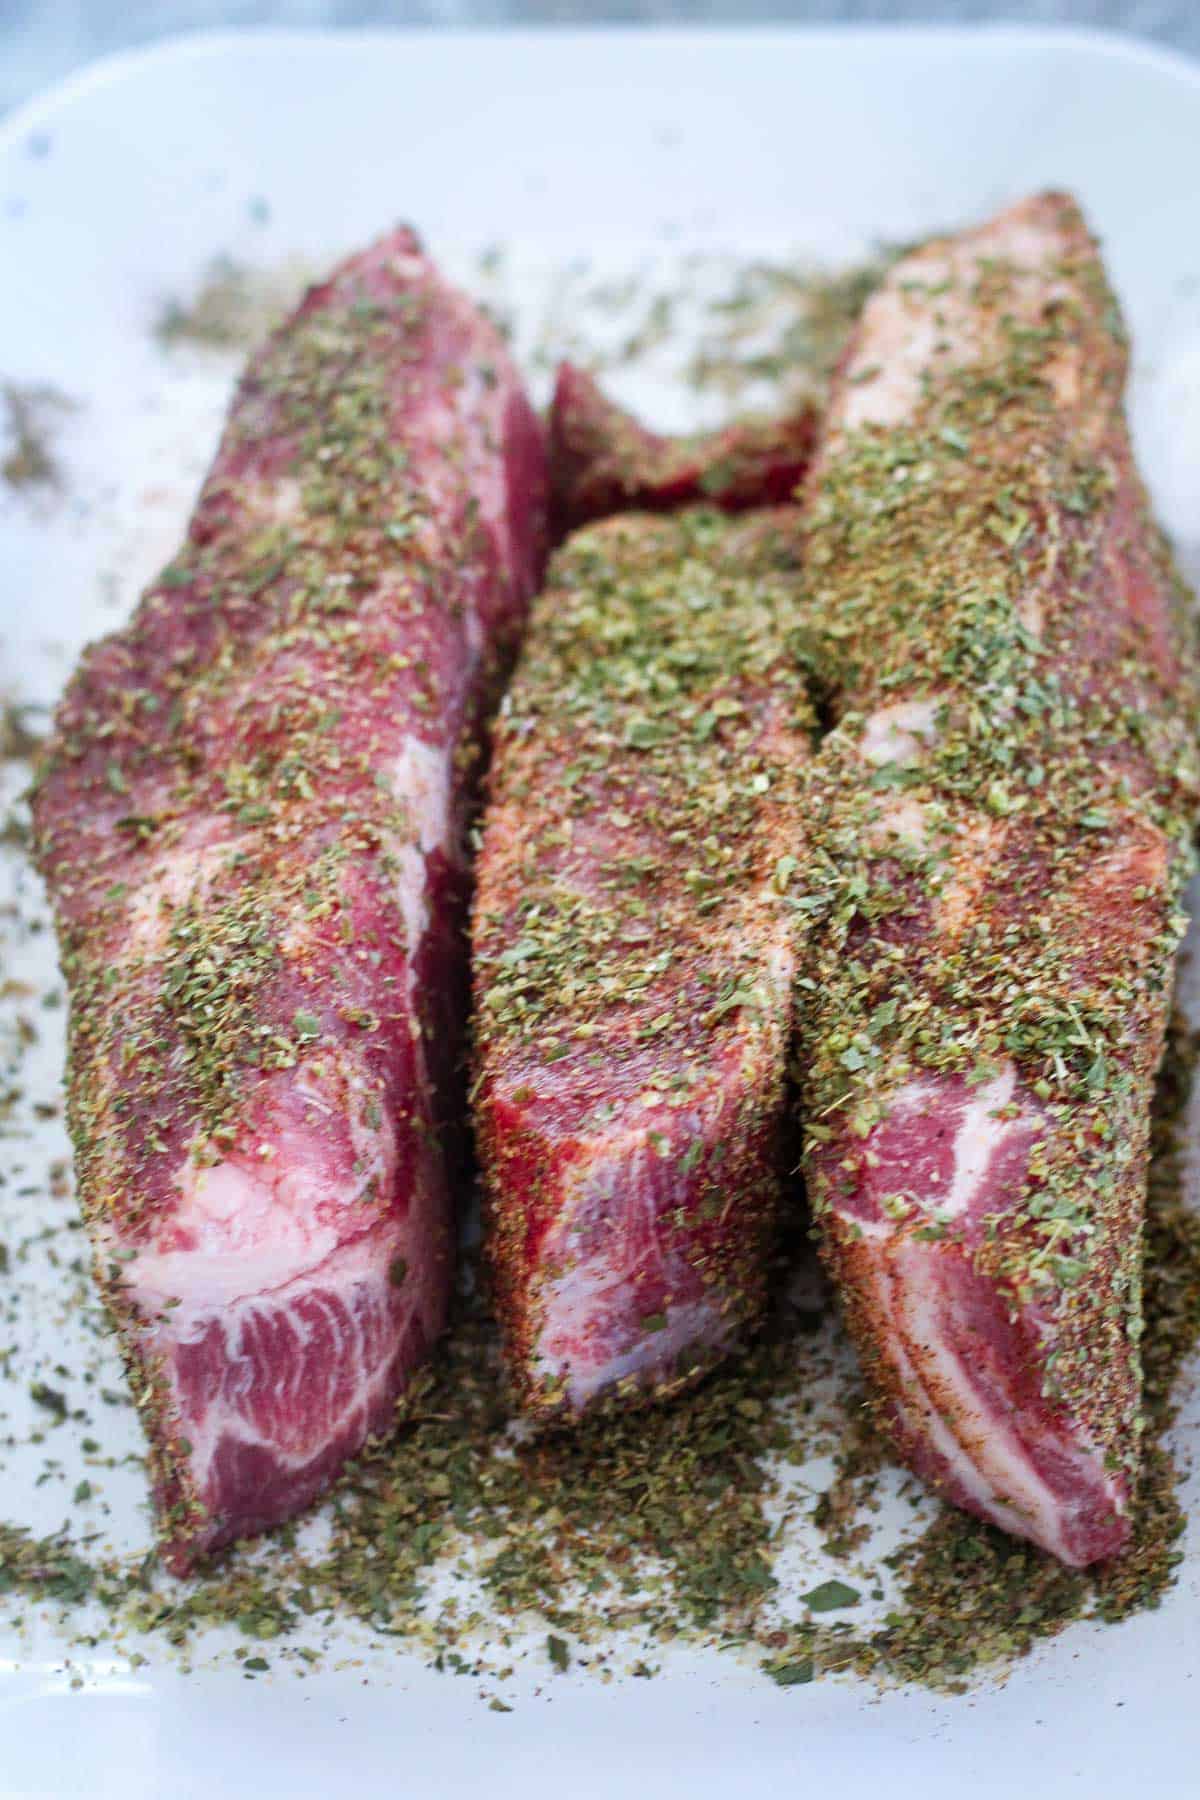 Seasoned country-style boneless pork ribs.